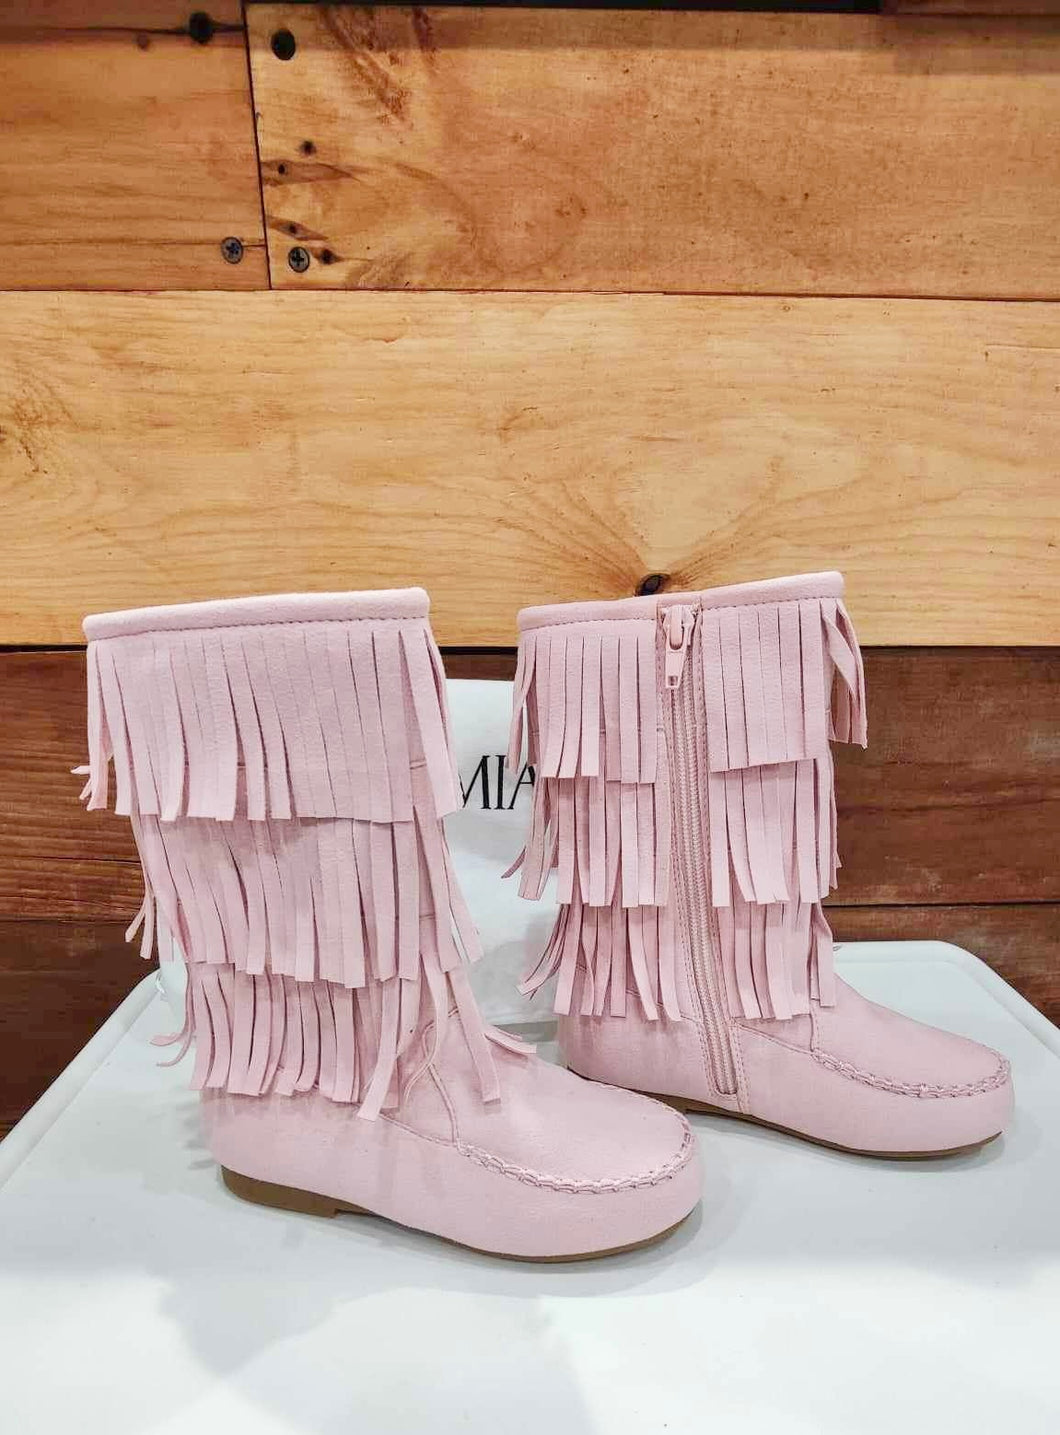 Liv & Mia Pink Fringe Boots Size 10